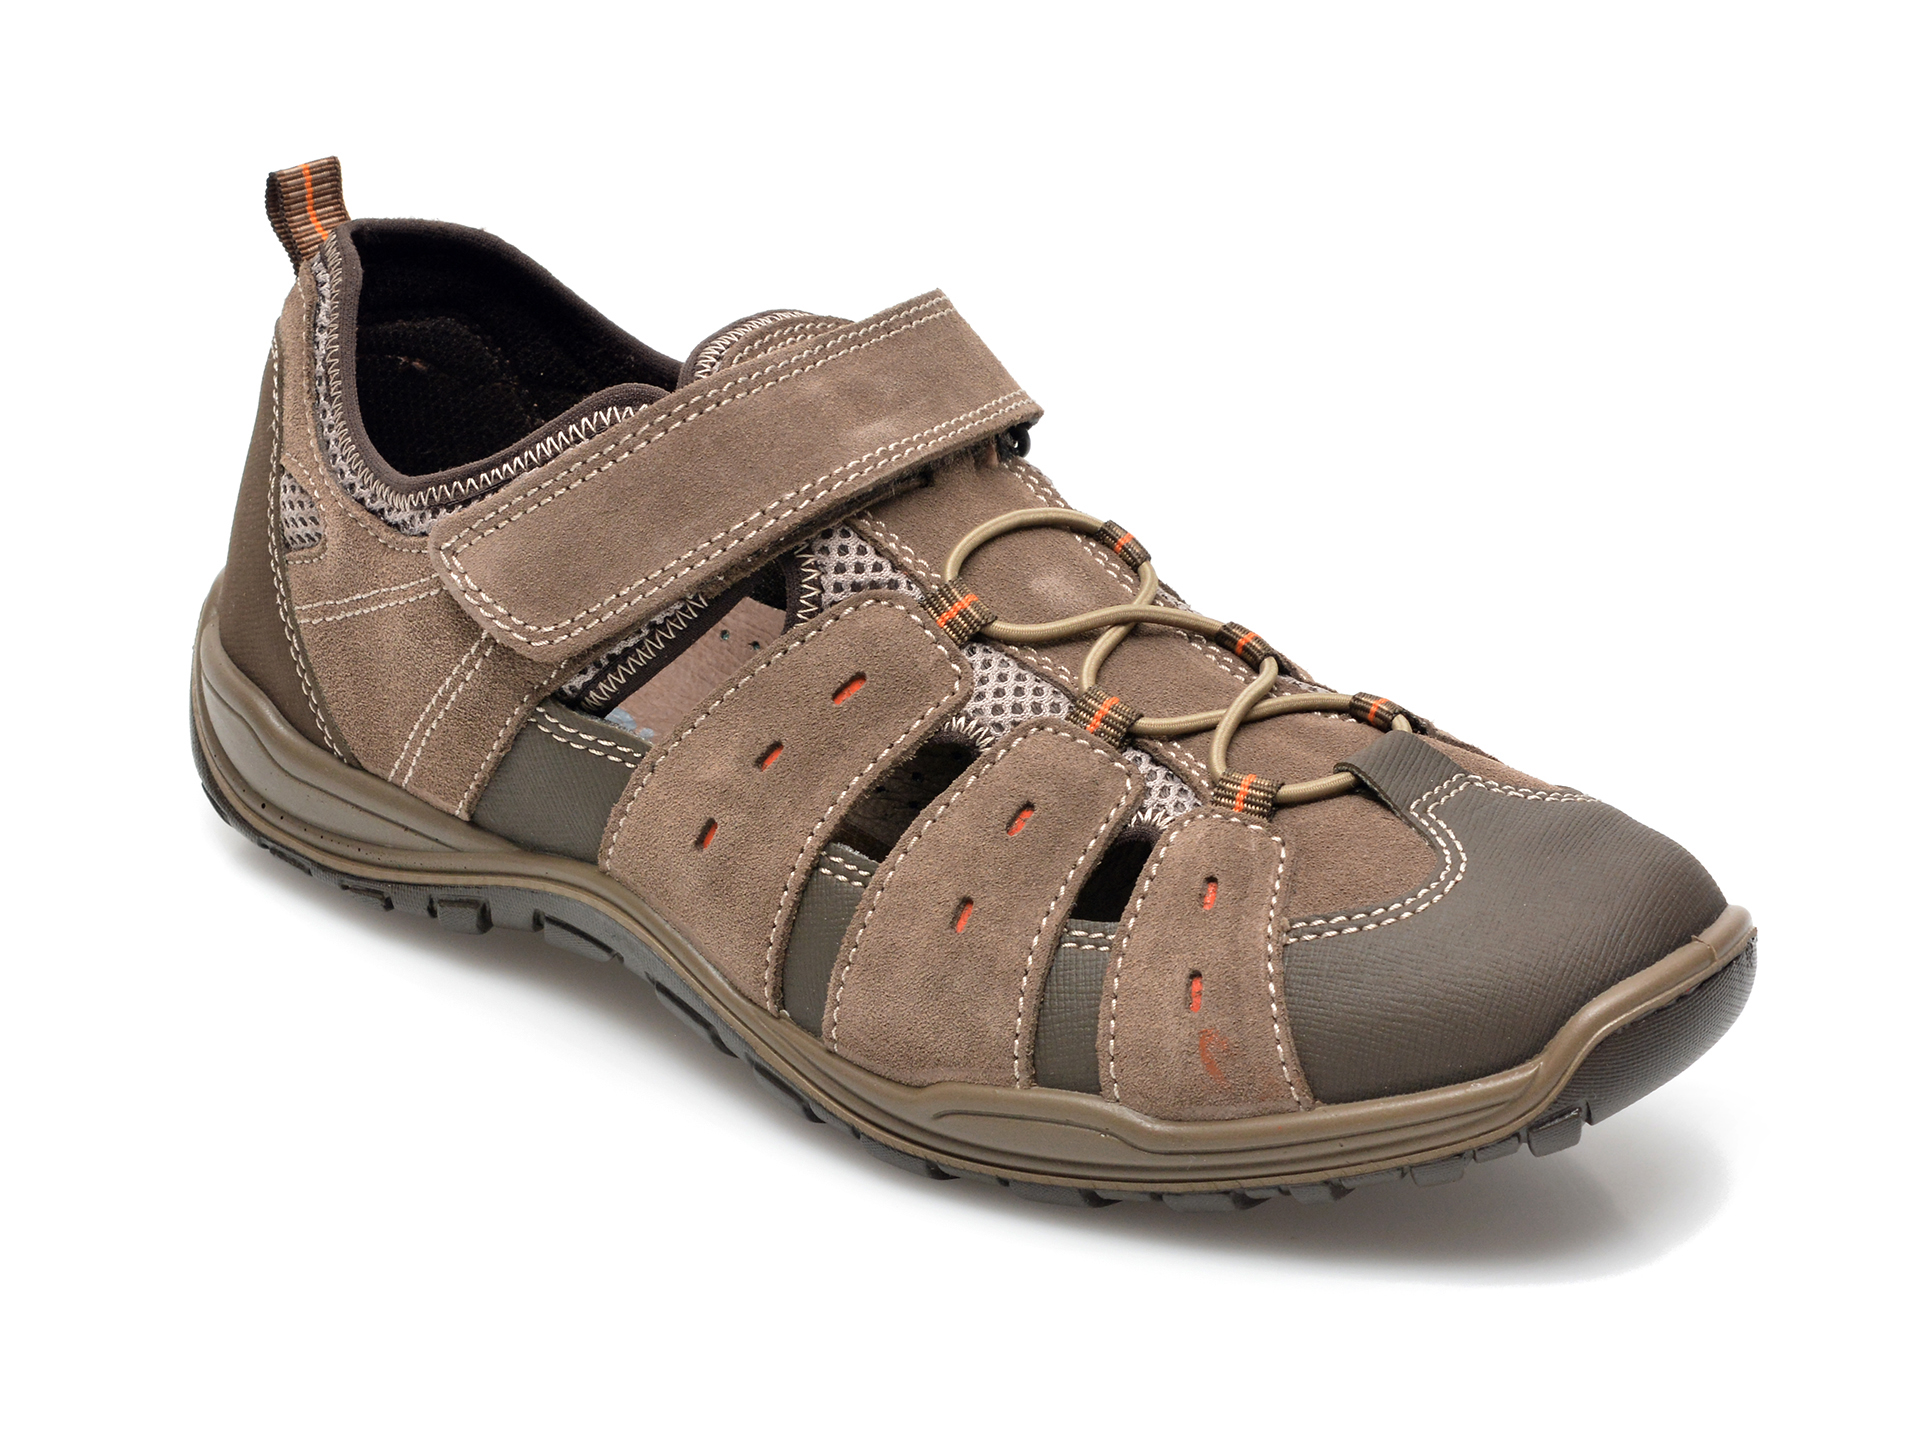 Pantofi IMAC gri, 502010, din material textil si piele intoarsa Imac